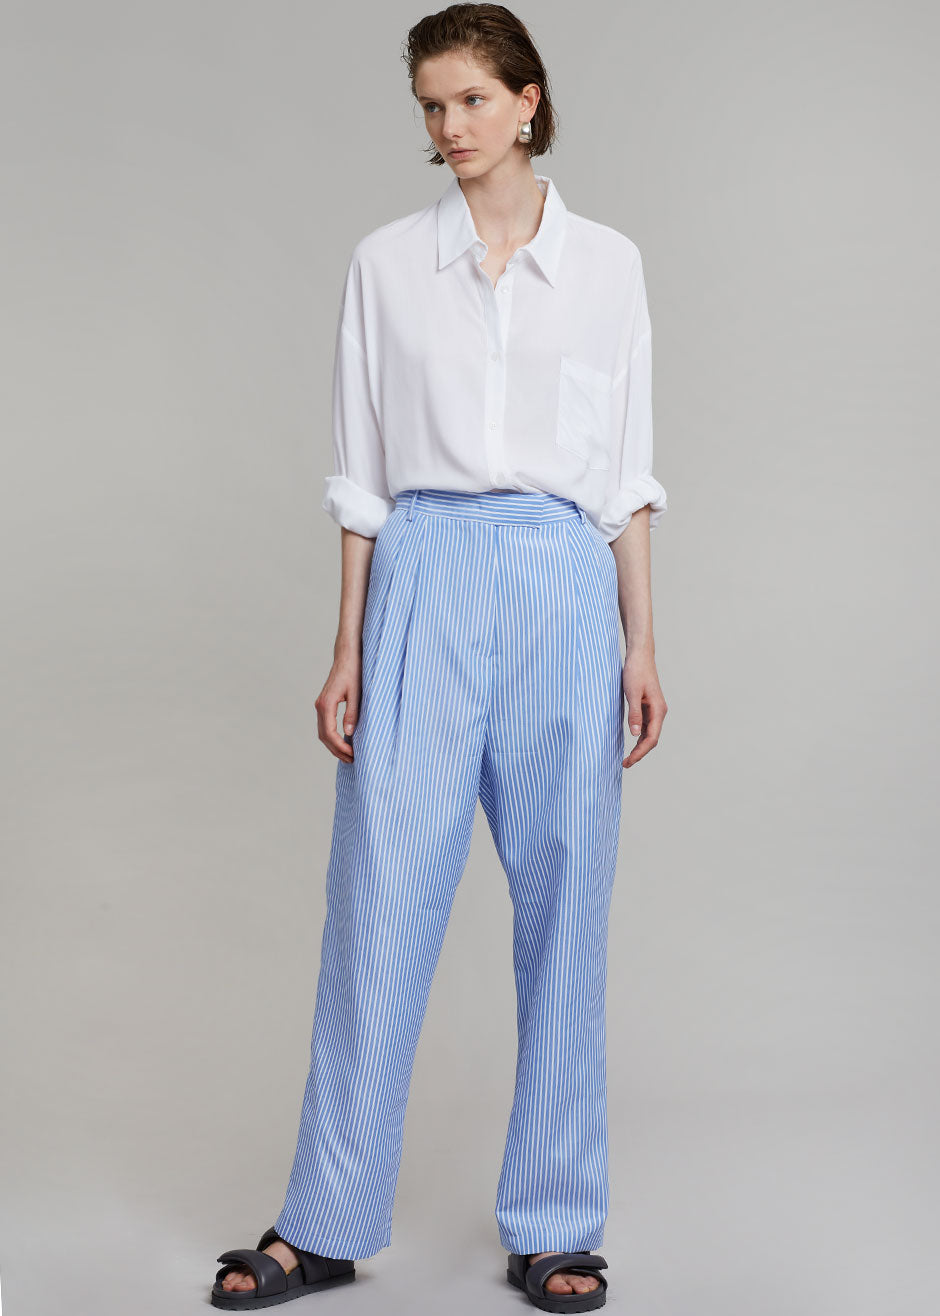 Bea Stripe Suit Pants - White/Light Blue